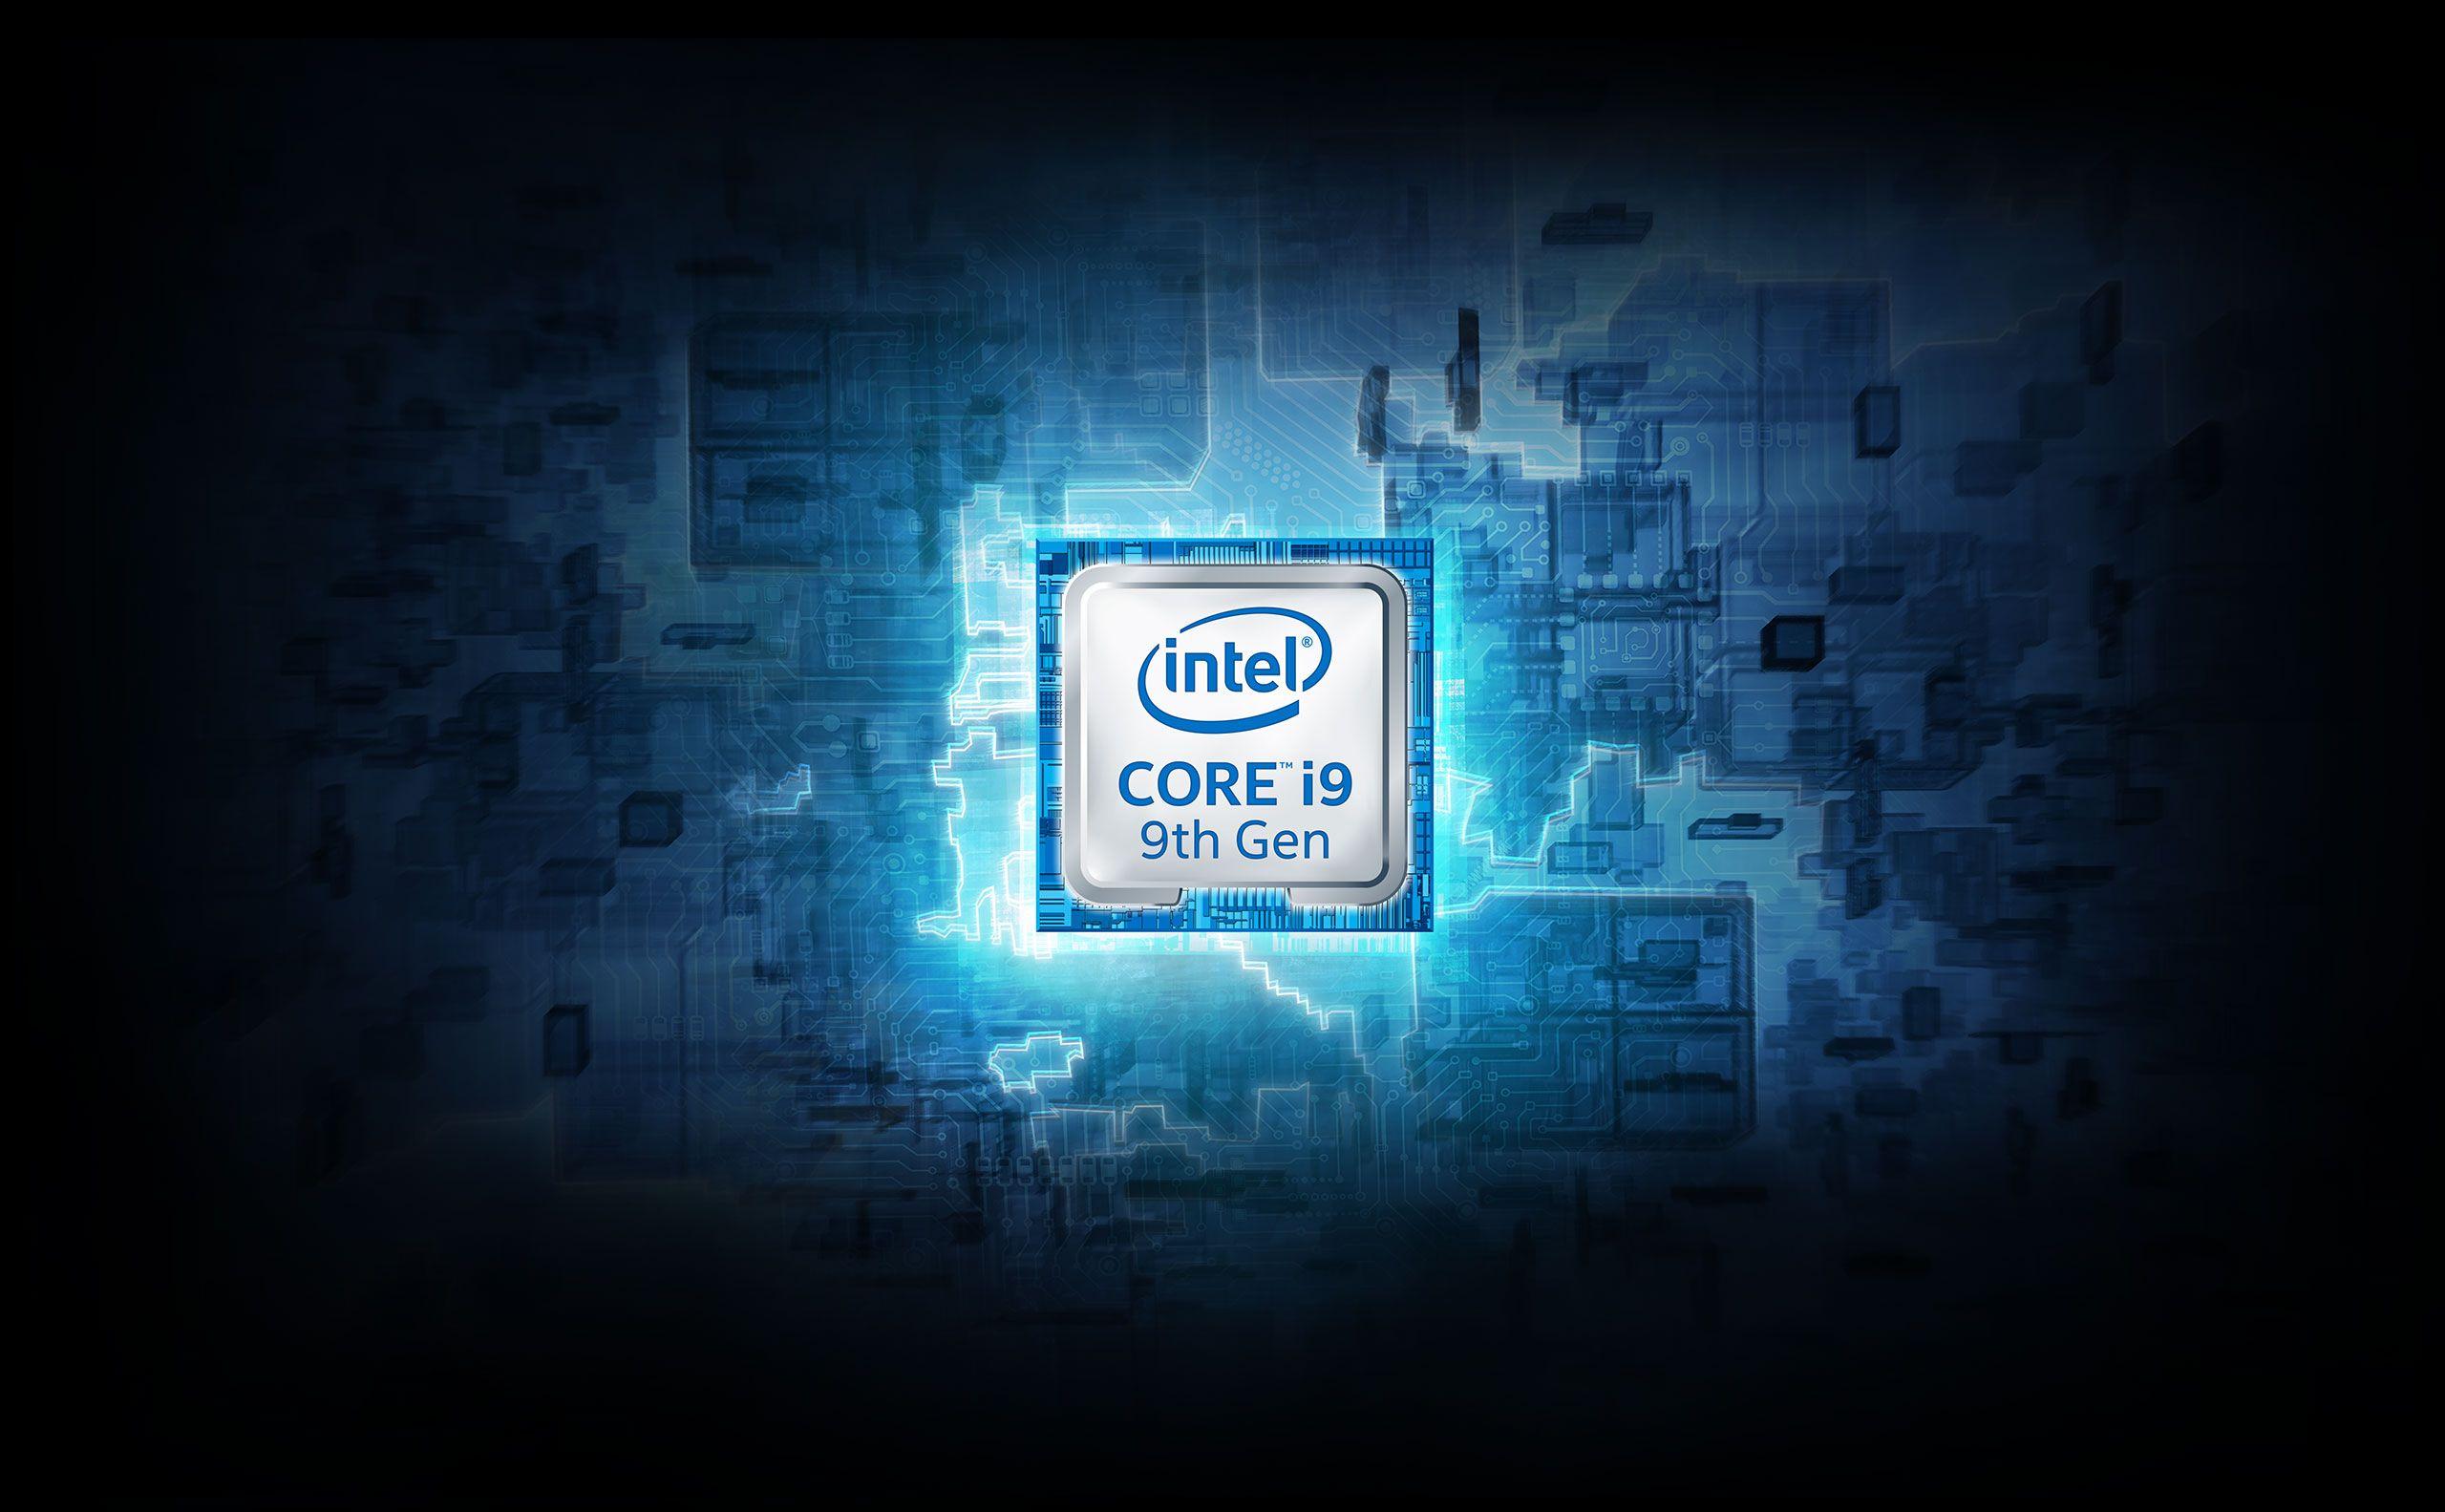 Intel Core i5 Desktop Wallpapers HD Intel Core i5 Backgrounds Free Images  Download